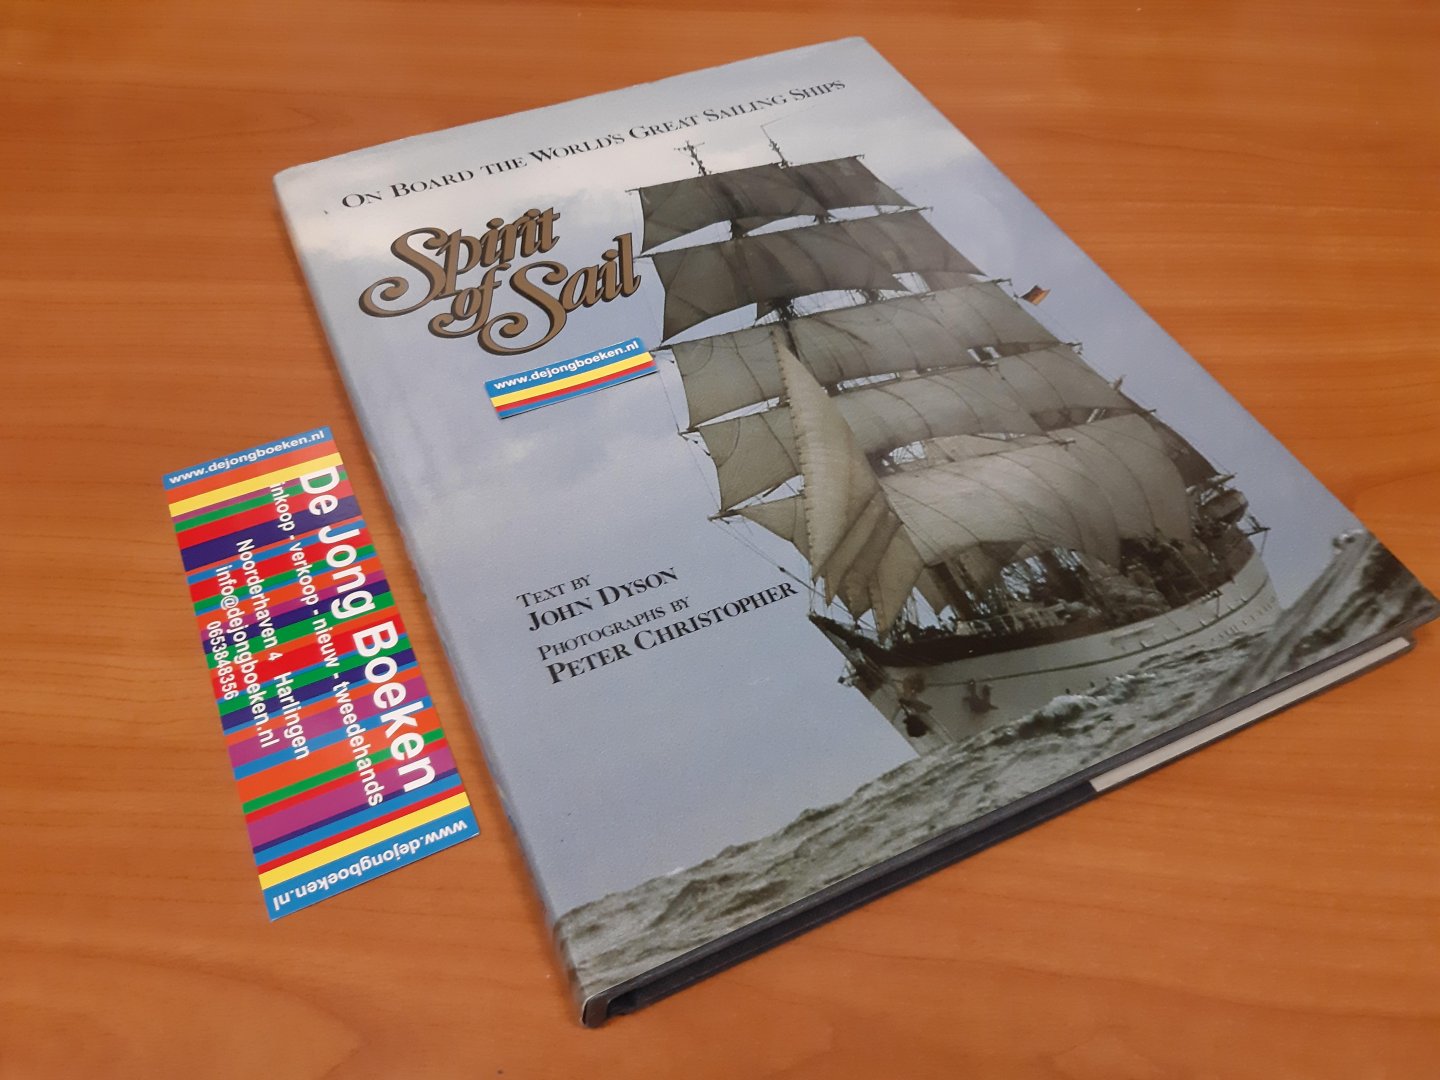 Dyson, John - Spirit of Sail / On board the worlds great sailing ships